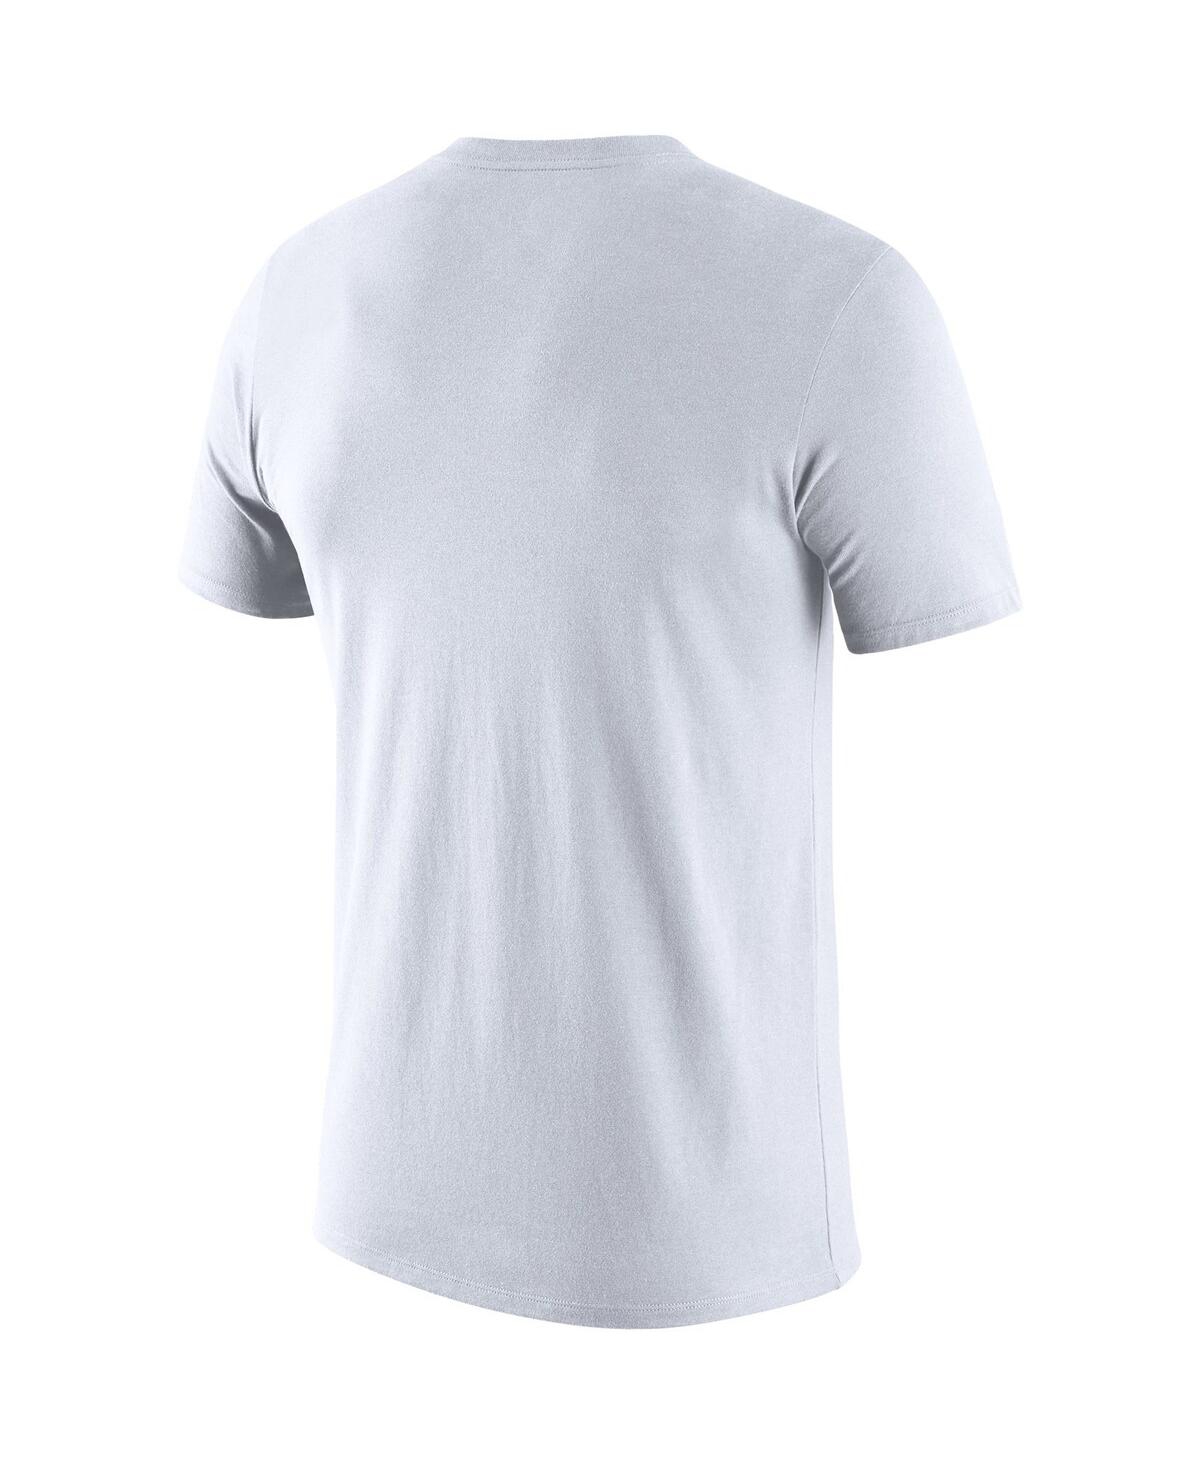 Shop Nike Men's  White Ucla Bruins Logo Stack Legend Performance T-shirt